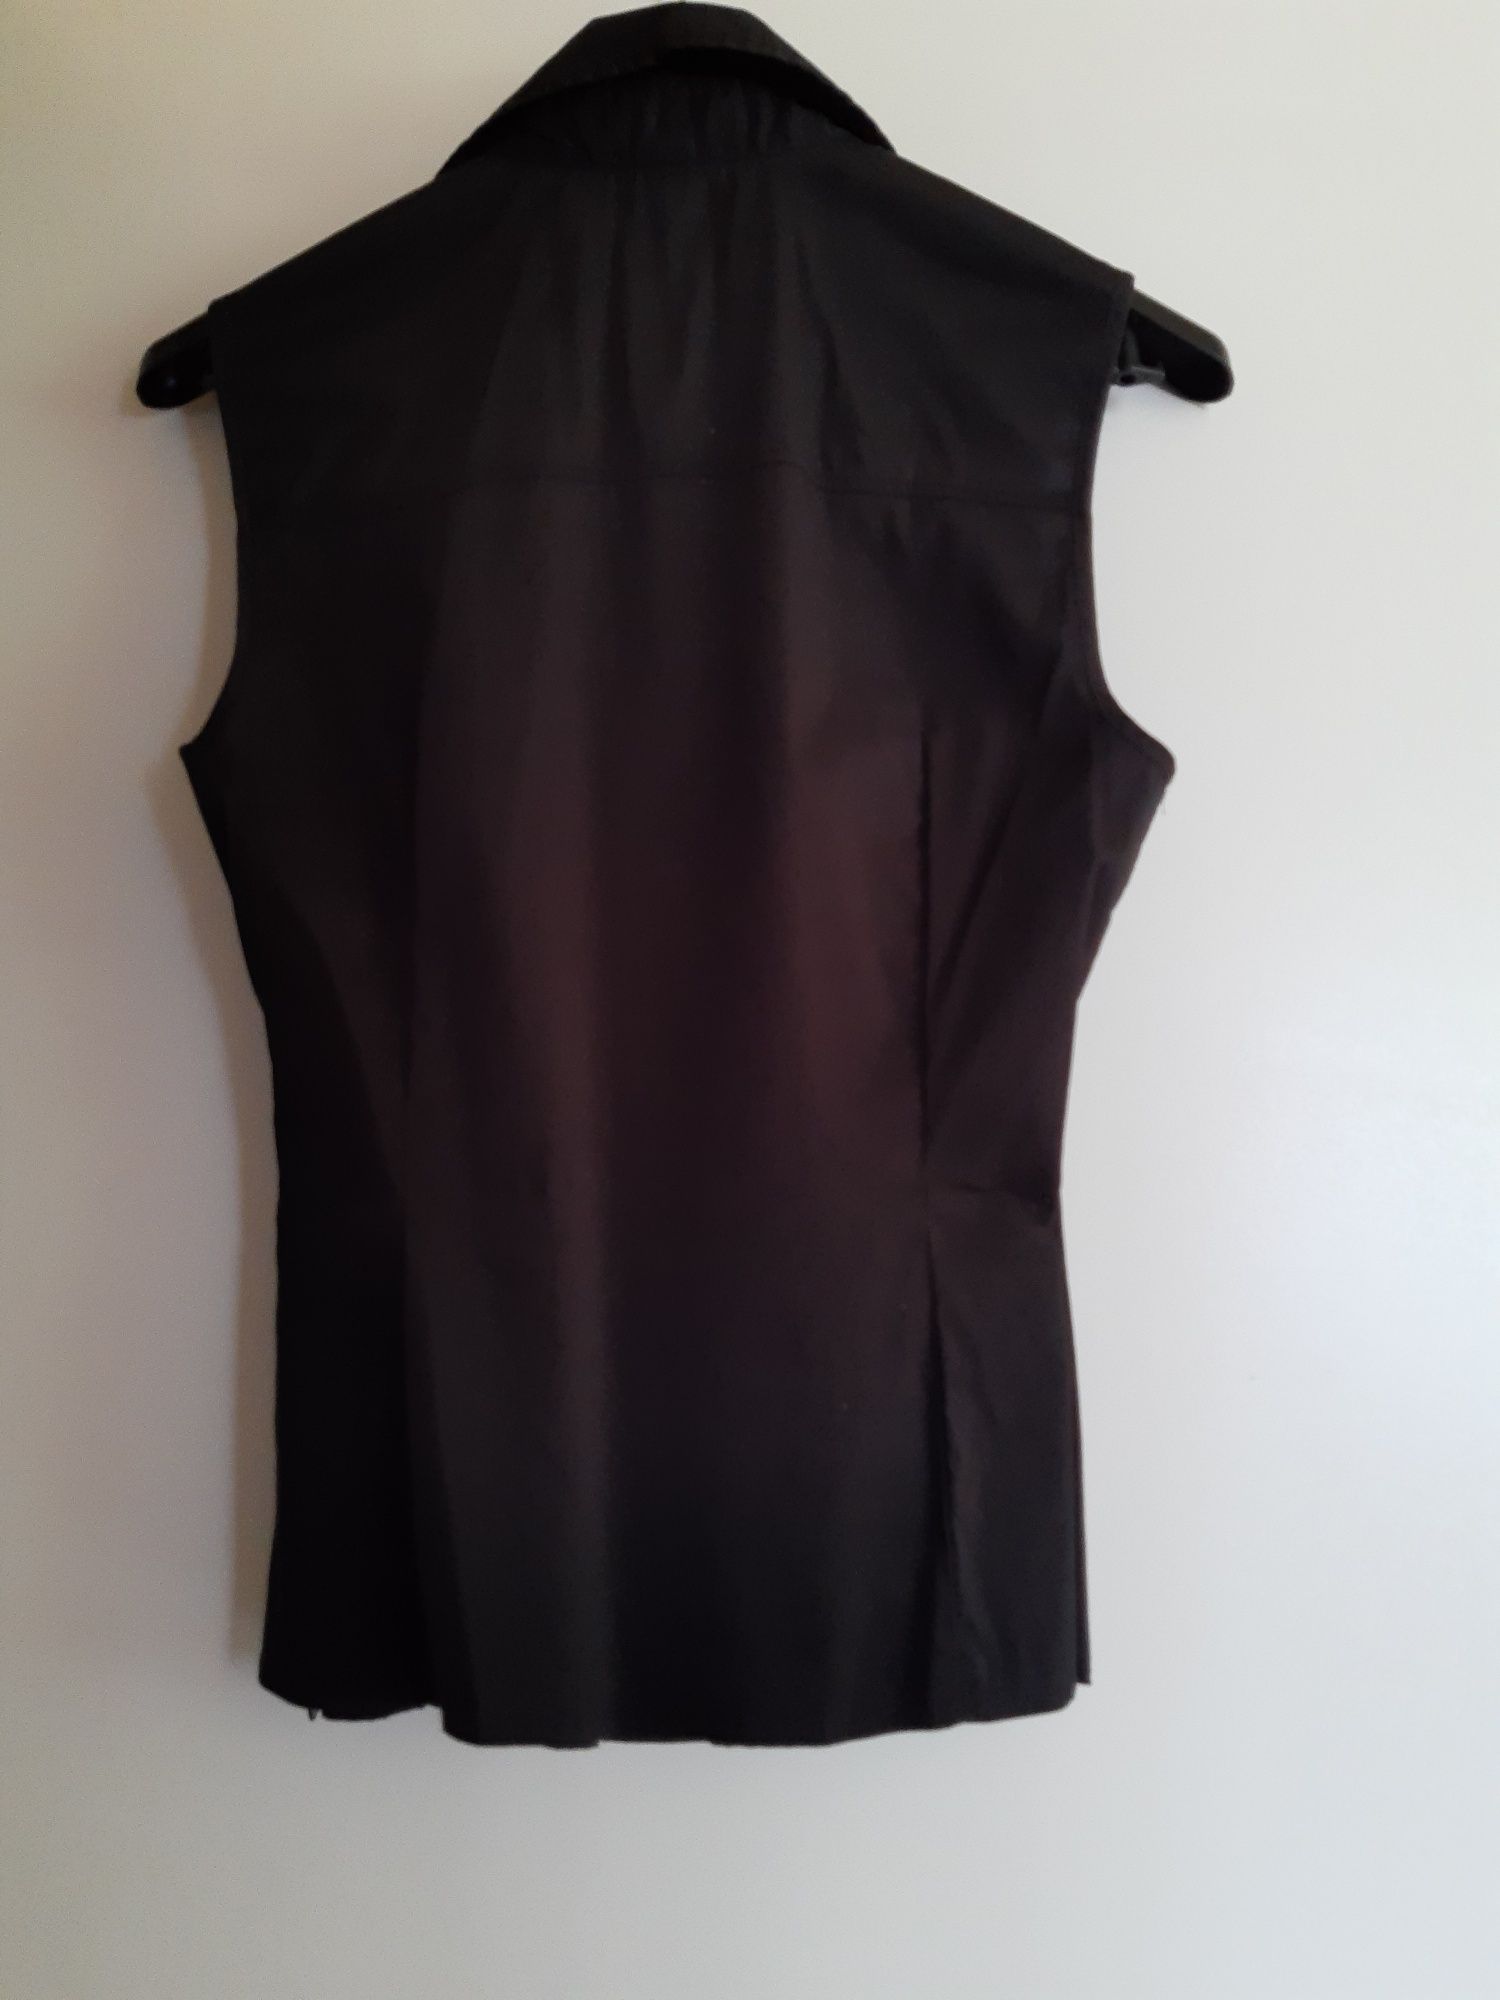 Bluzka H&M, czarna, elegancka, 36